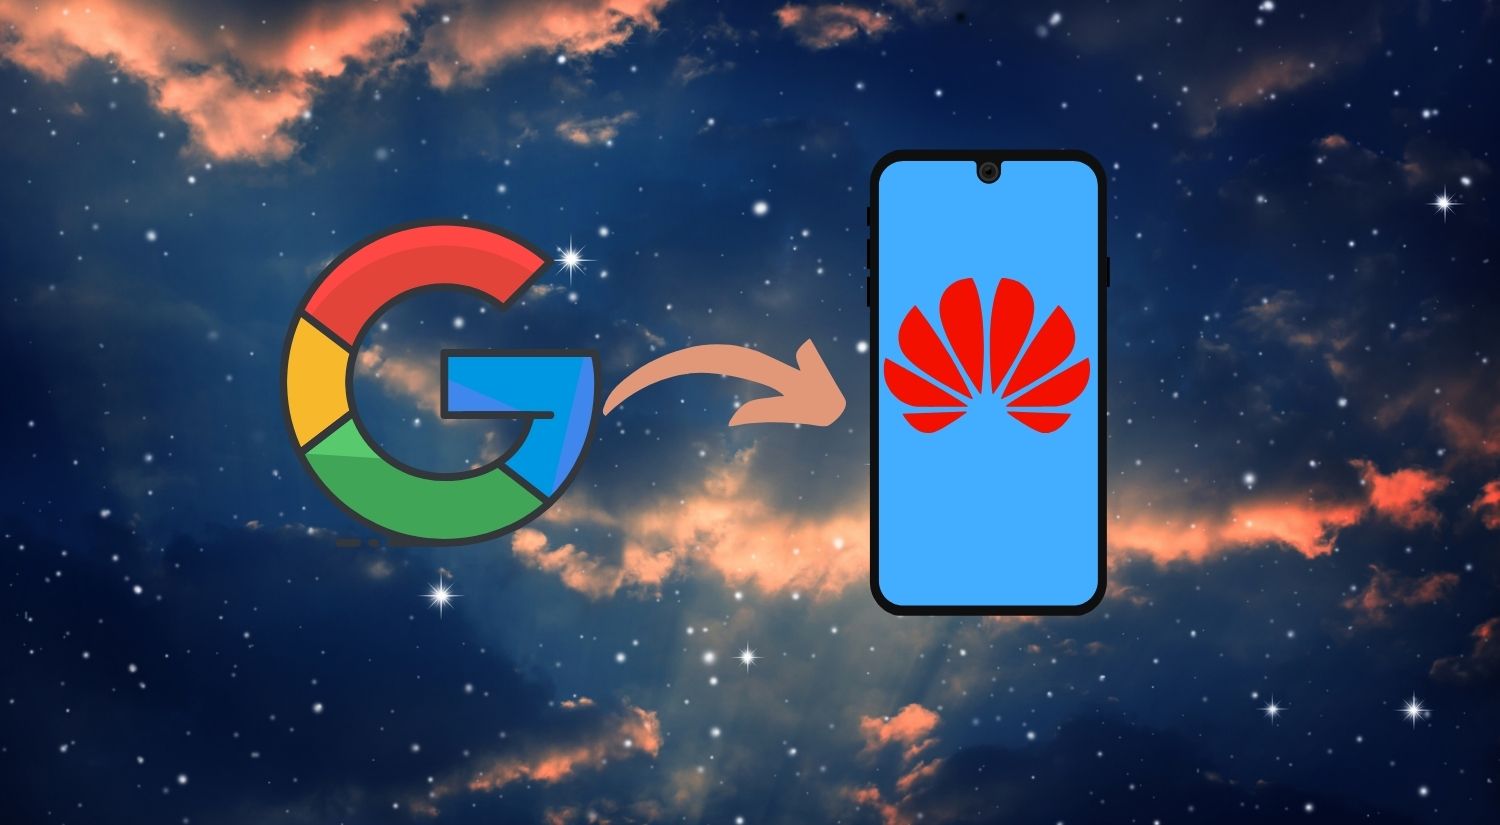 Googlefier easy installs google apps on huawei phones